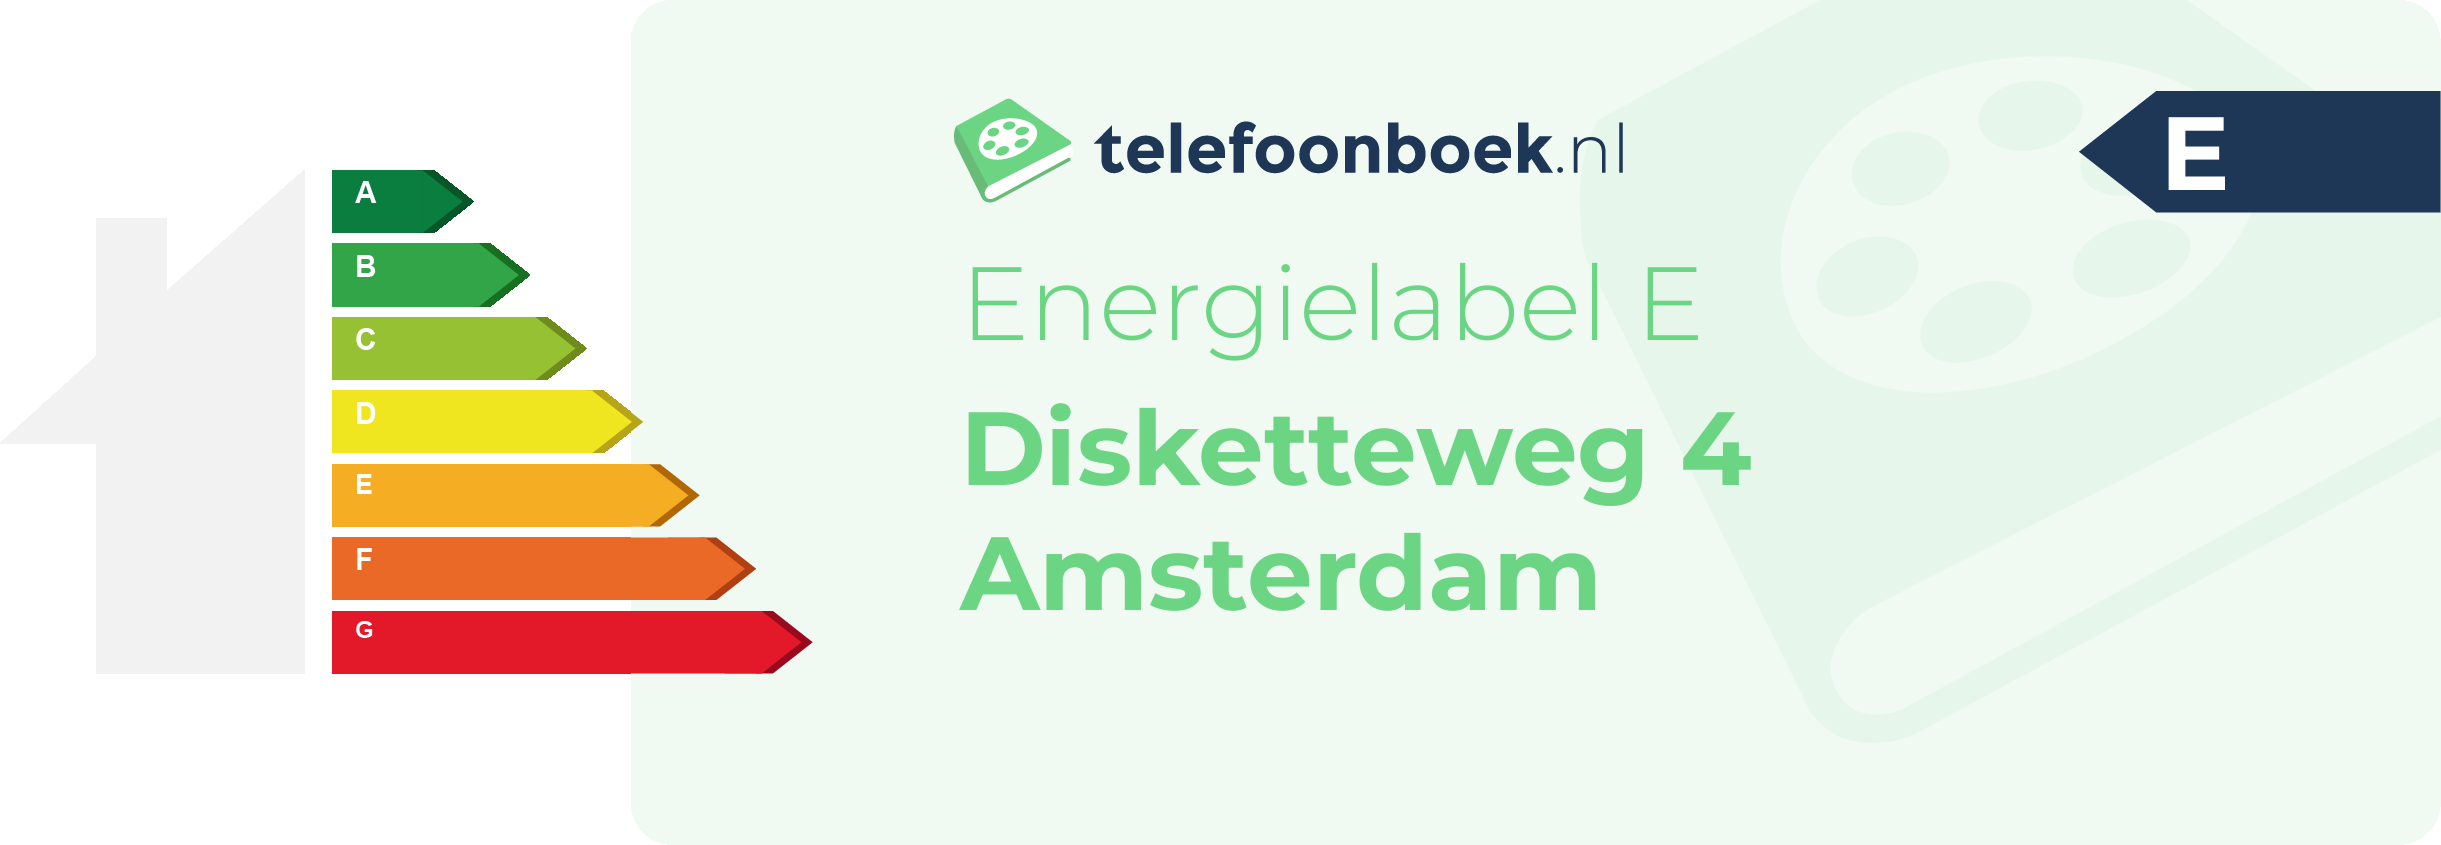 Energielabel Disketteweg 4 Amsterdam